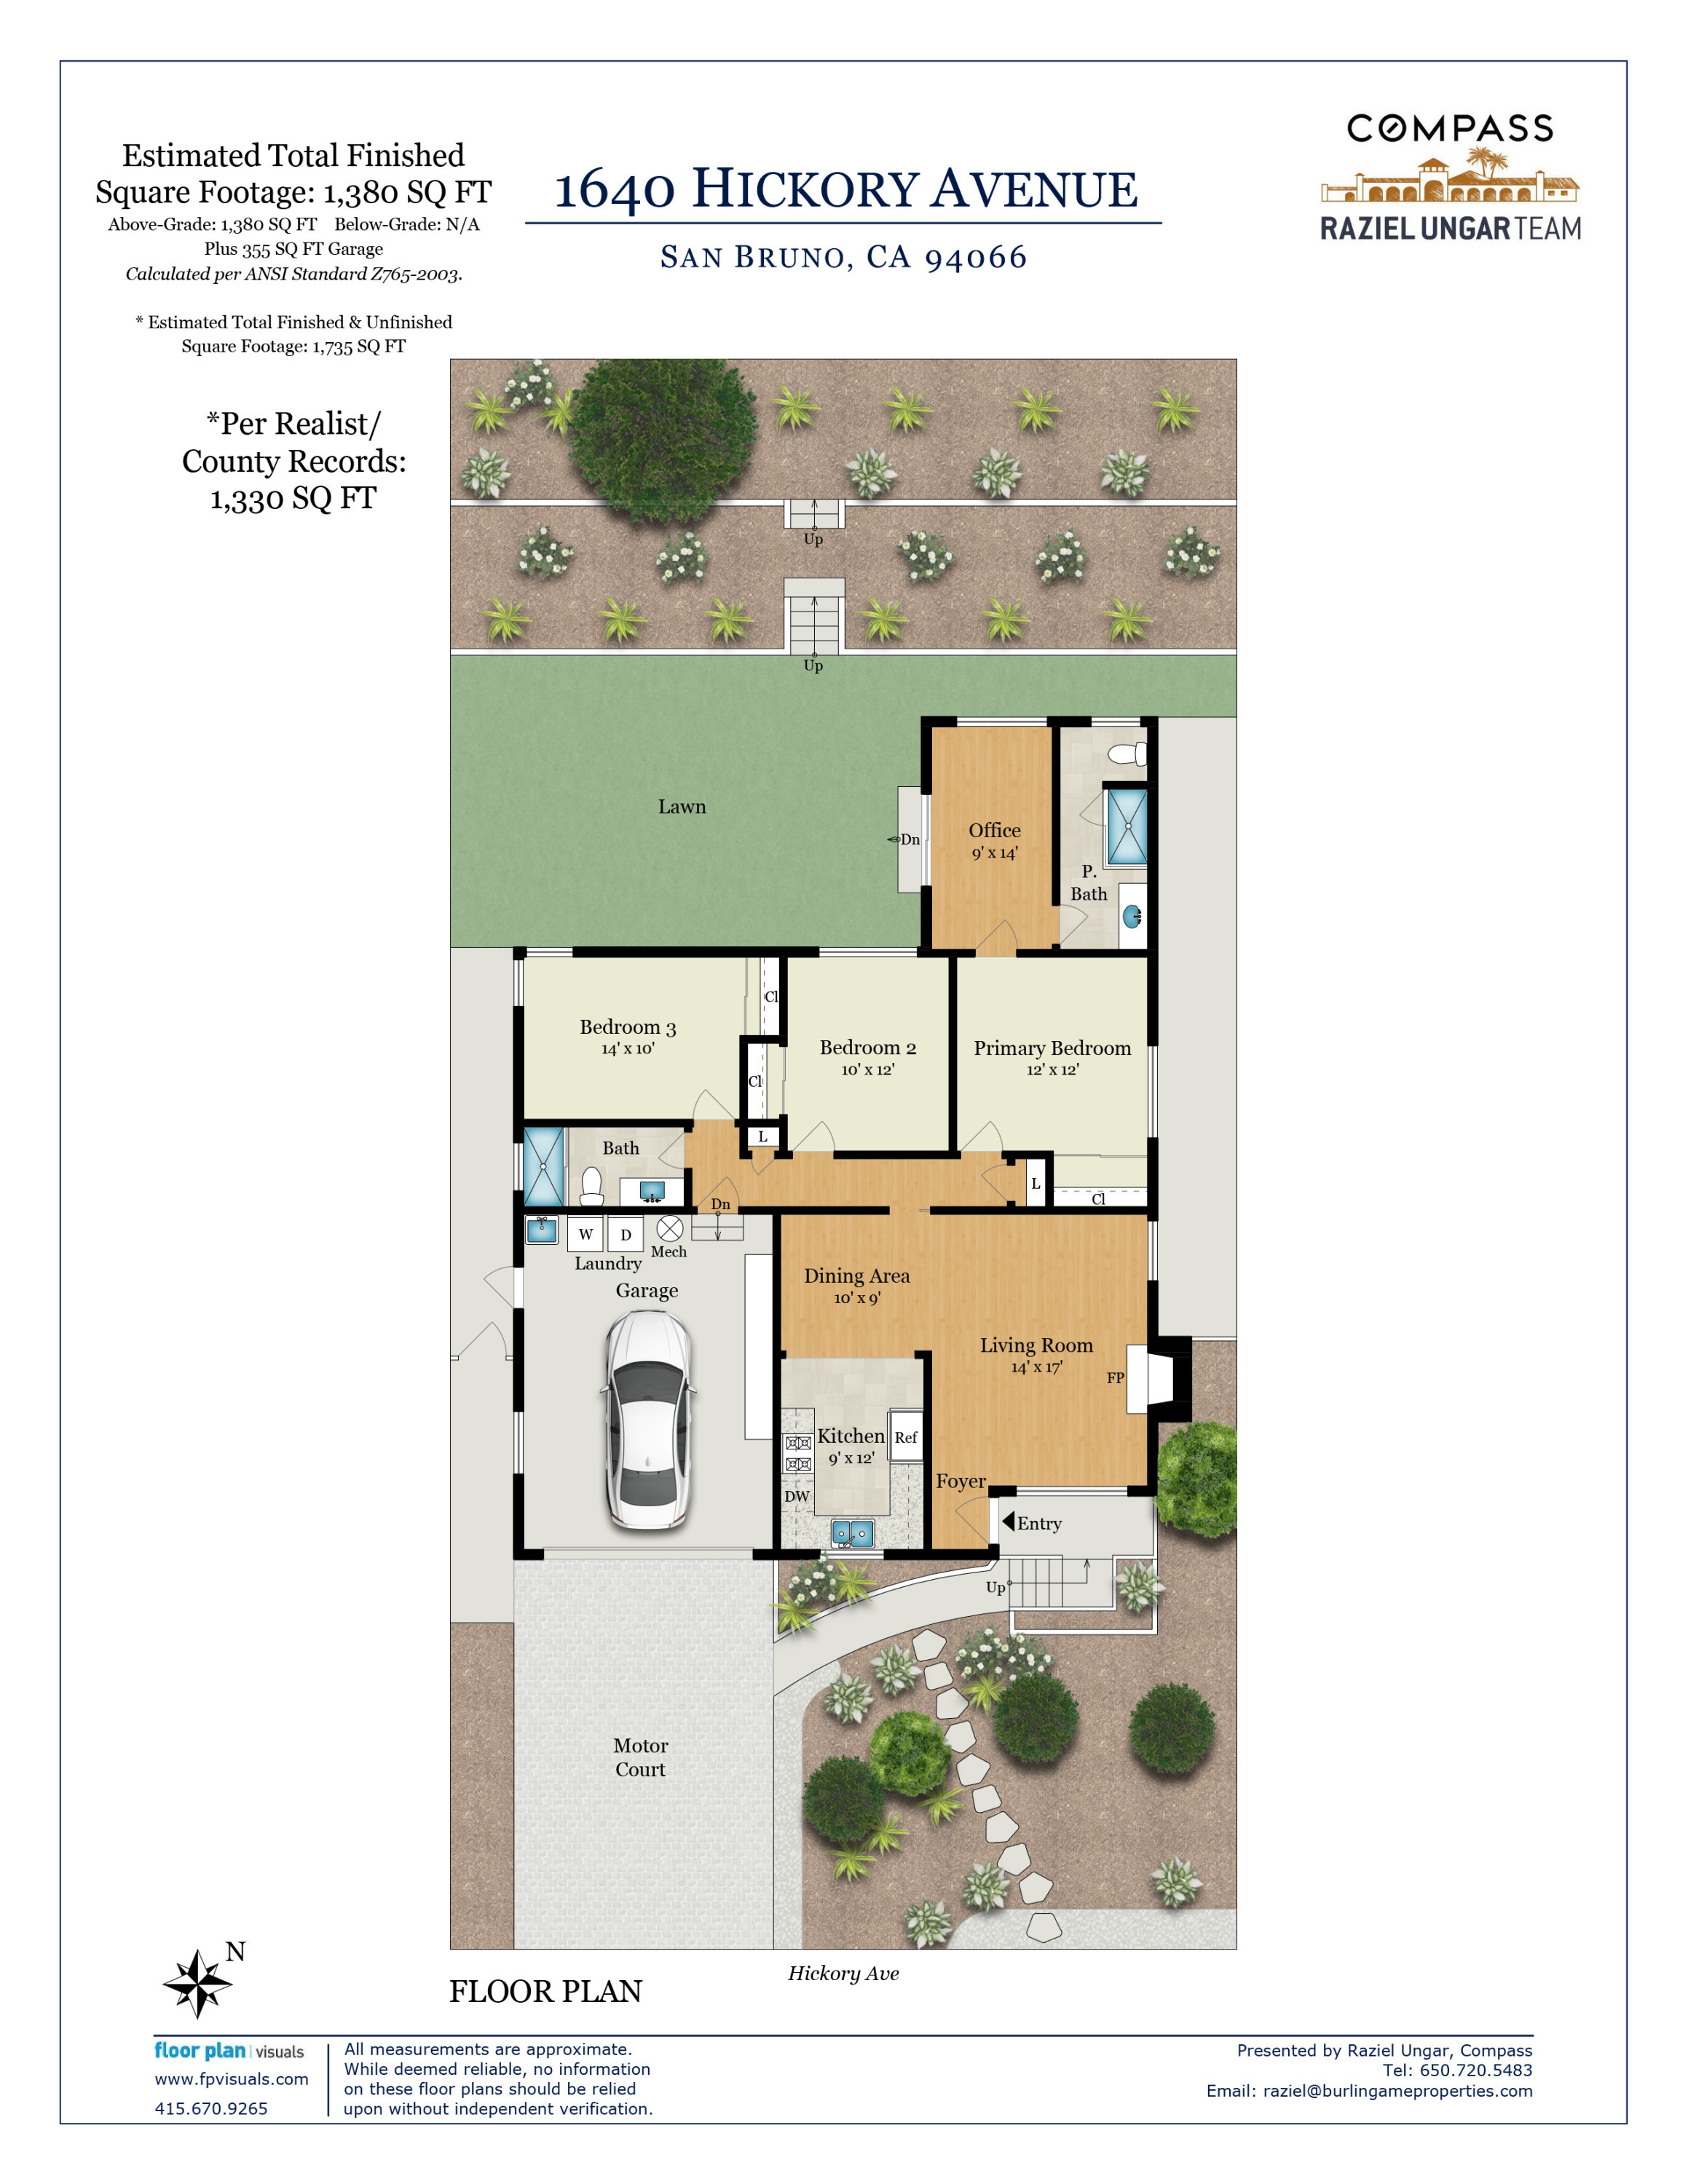 1640 Hickory Ave floor plan motor court